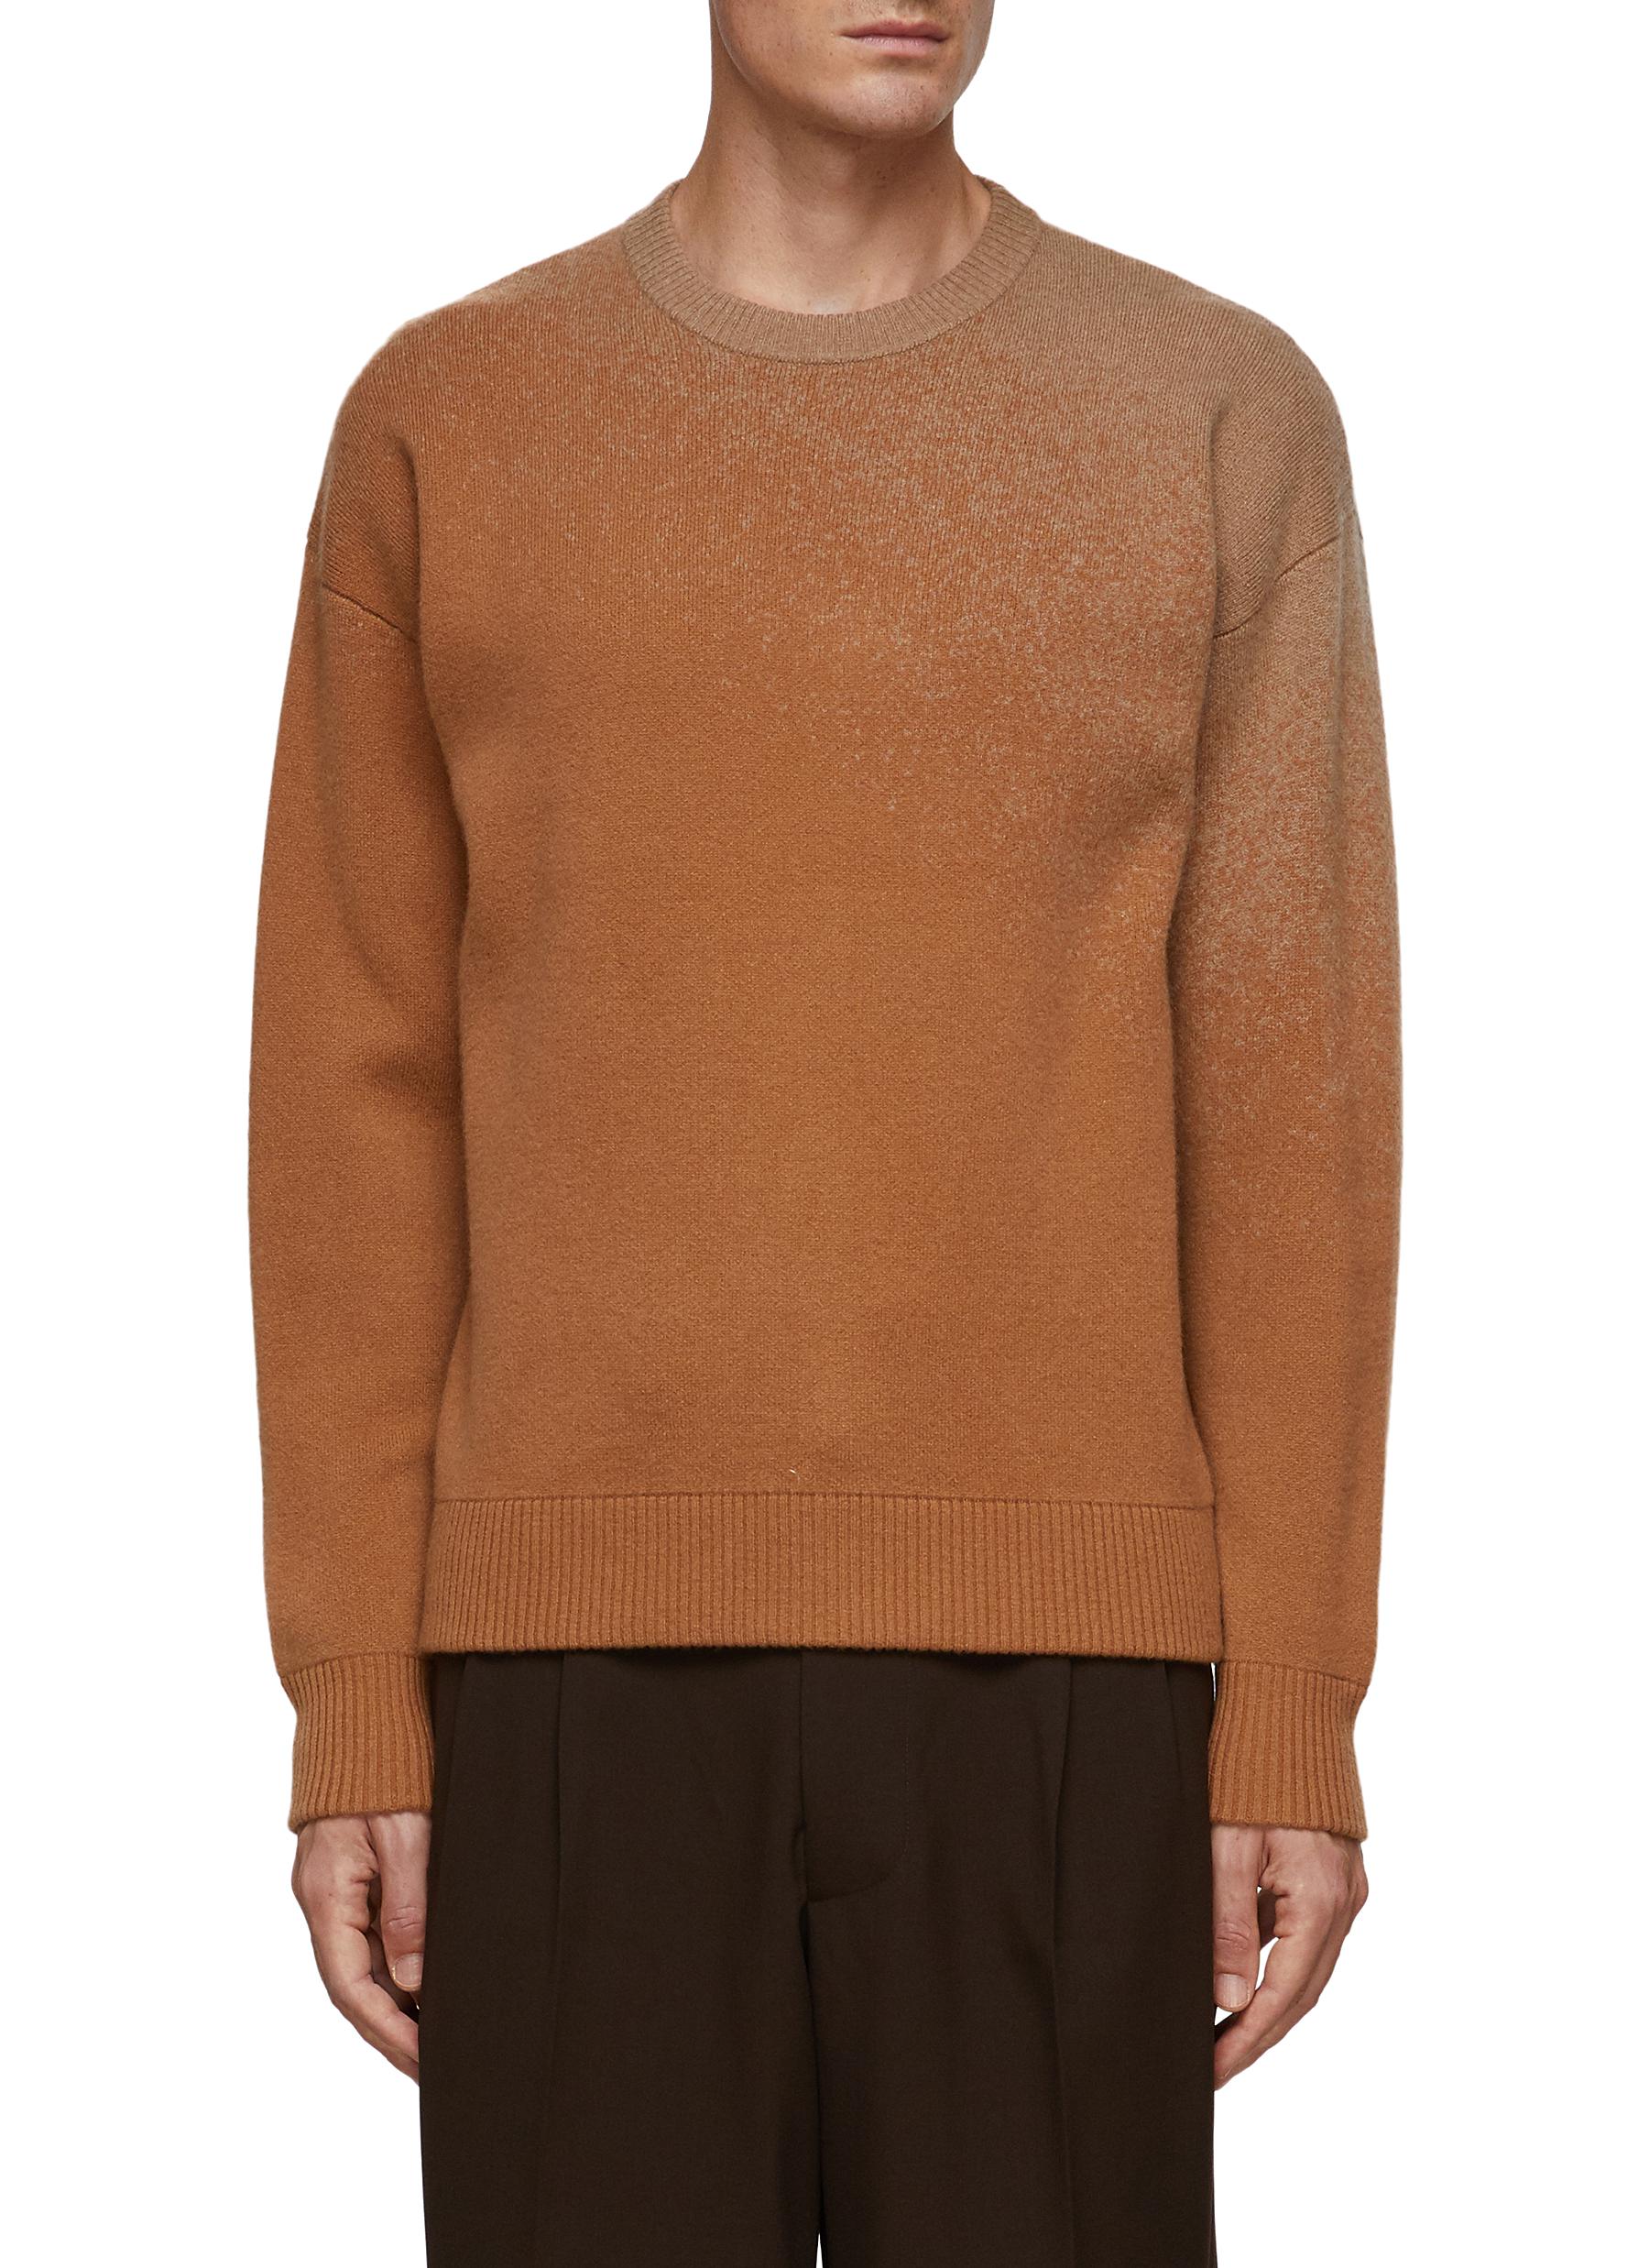 Dreyden Ombré Cashmere Knit Crewneck Sweater In Brown